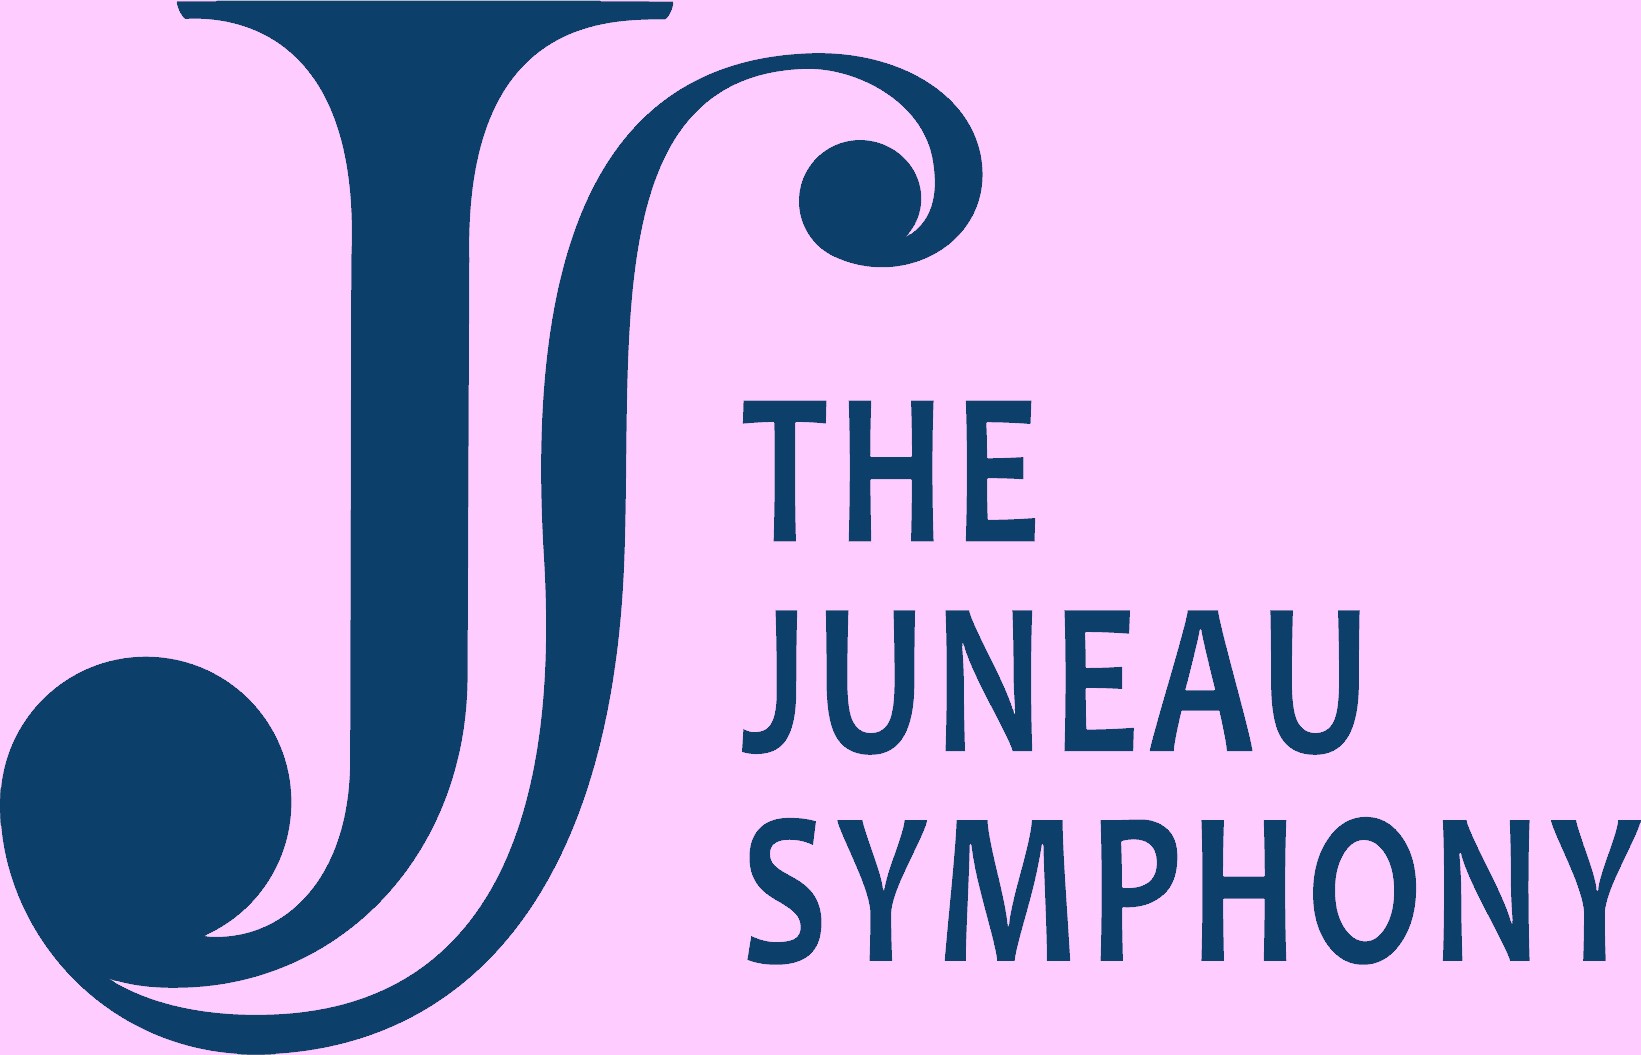 Juneau Symphony